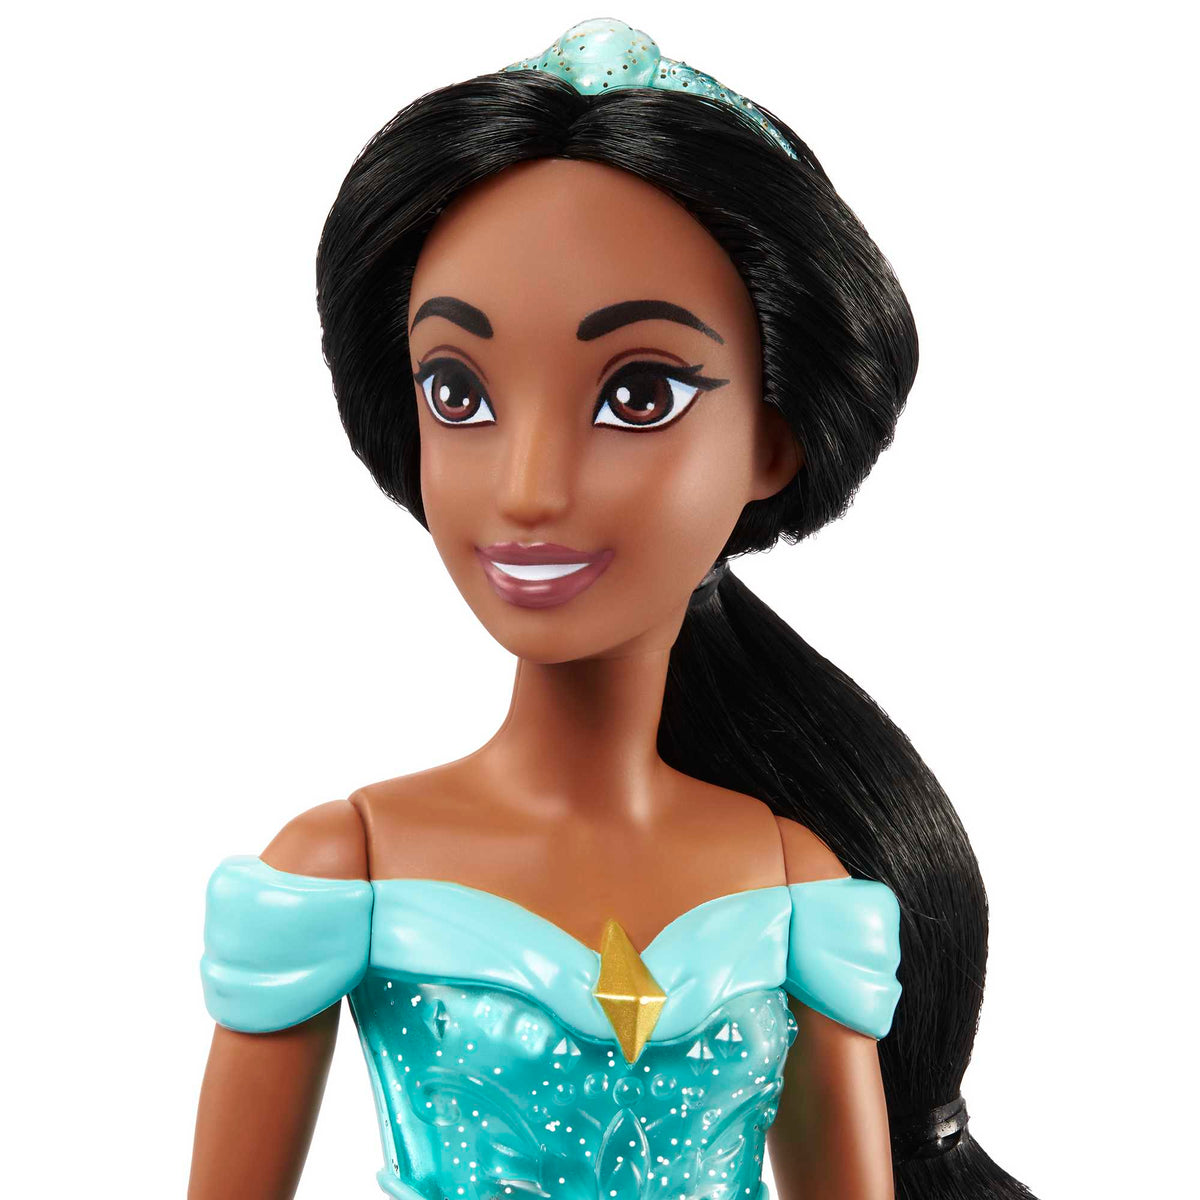 Disney Princess Jasmine Doll